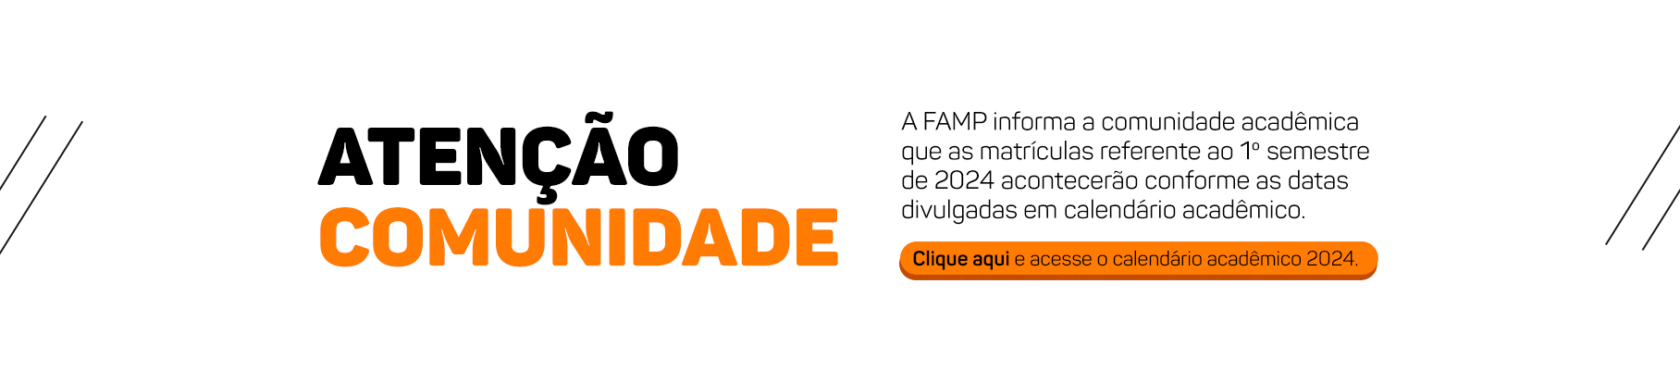 banner matriculas 2024 - Faculdade FAMP.